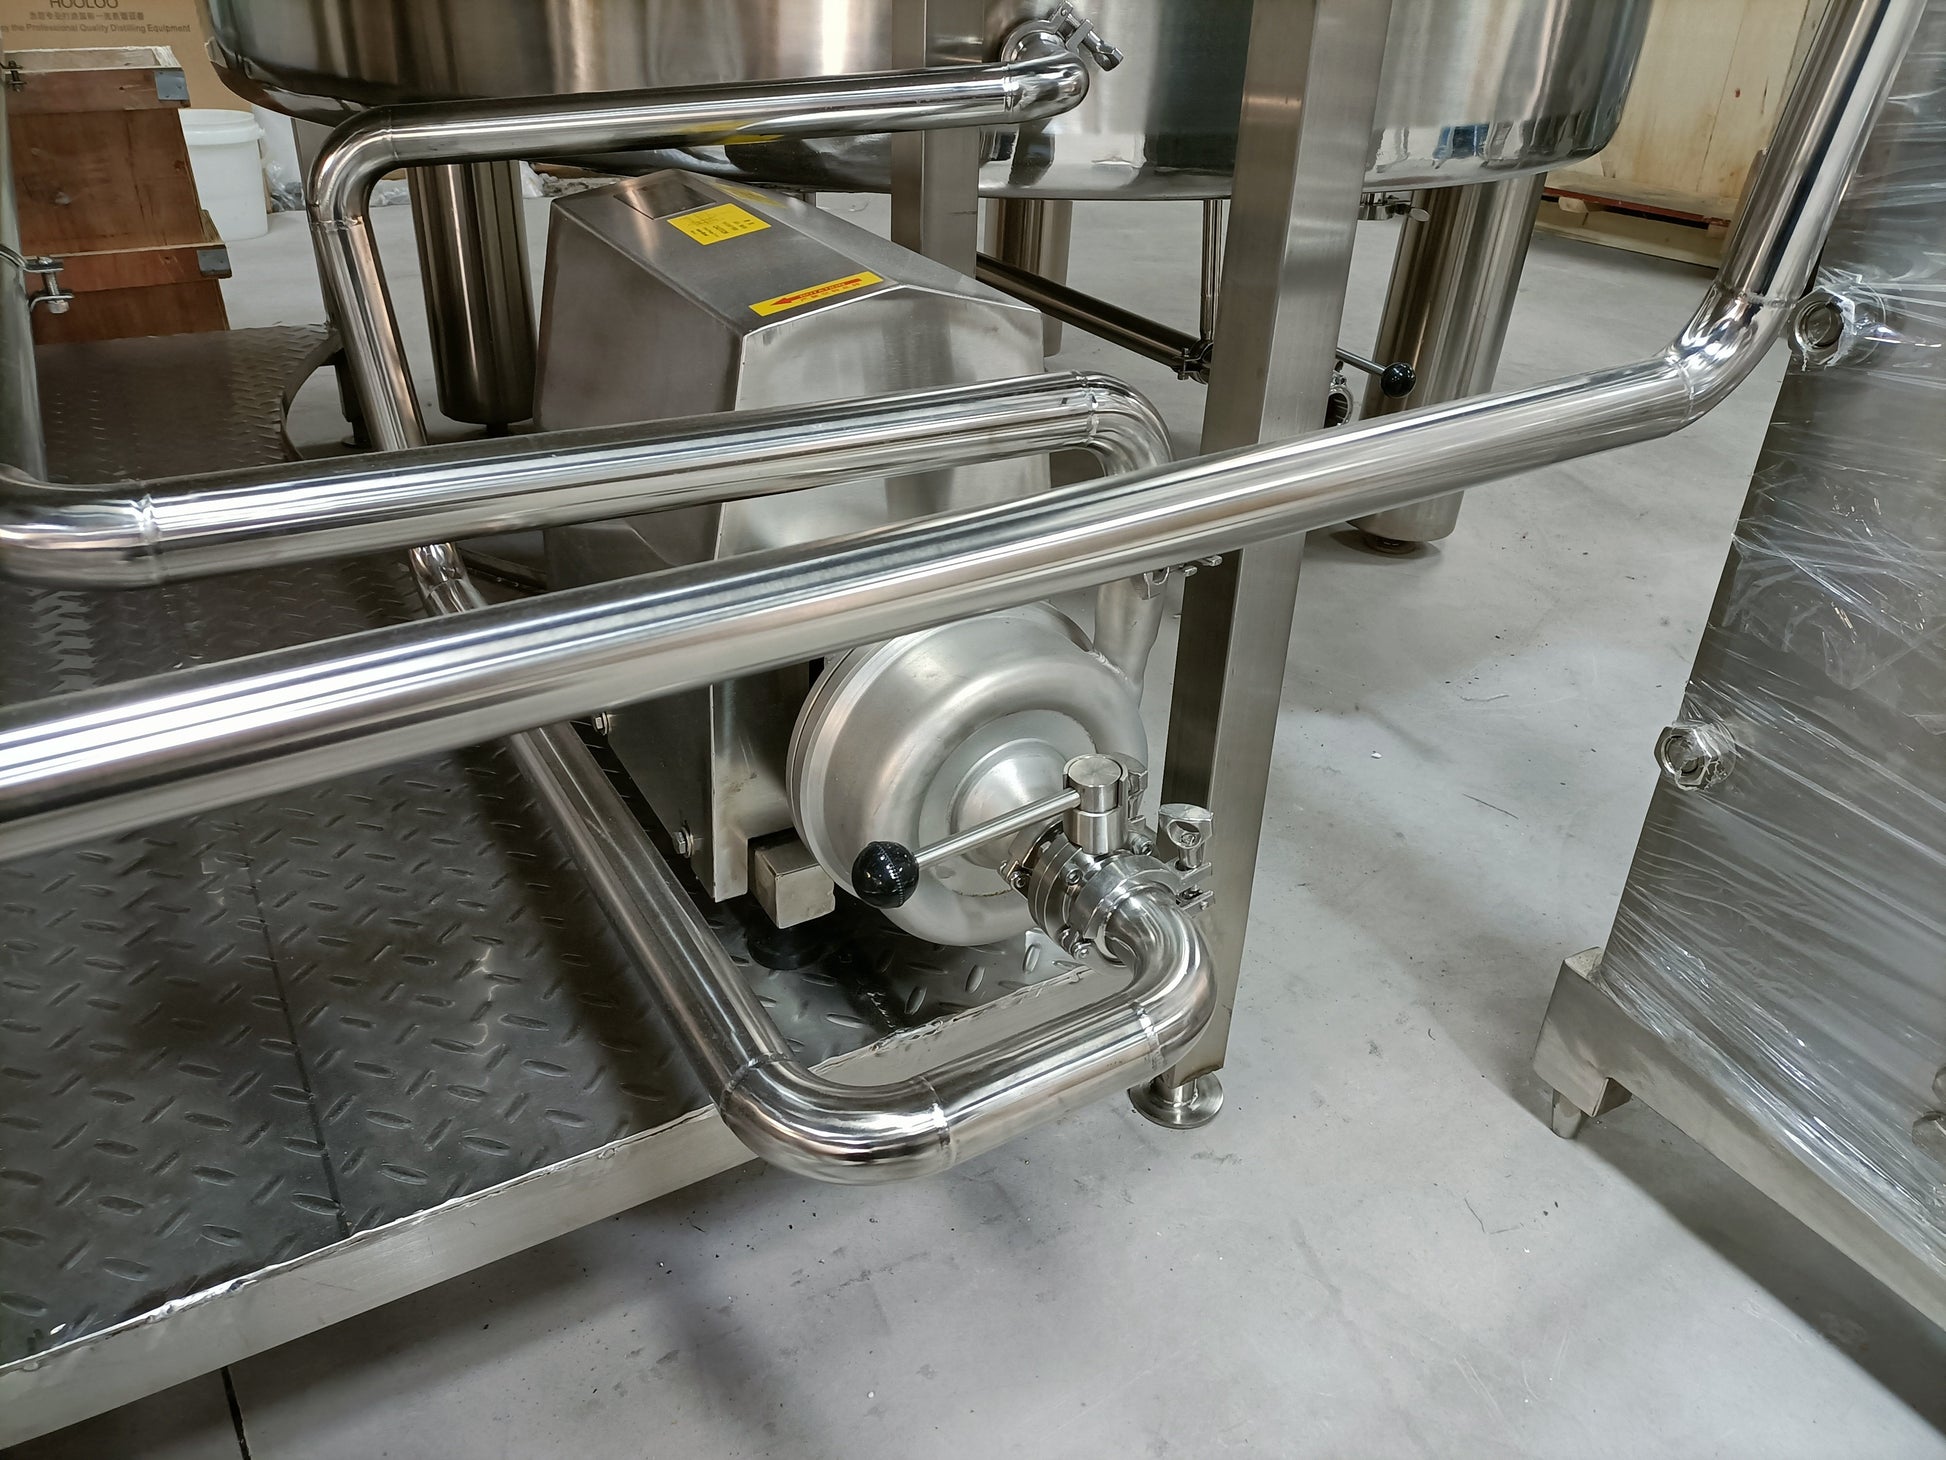 1500L+1500L Hooloo's mash tun system - Hooloo Distilling Equipment Supply